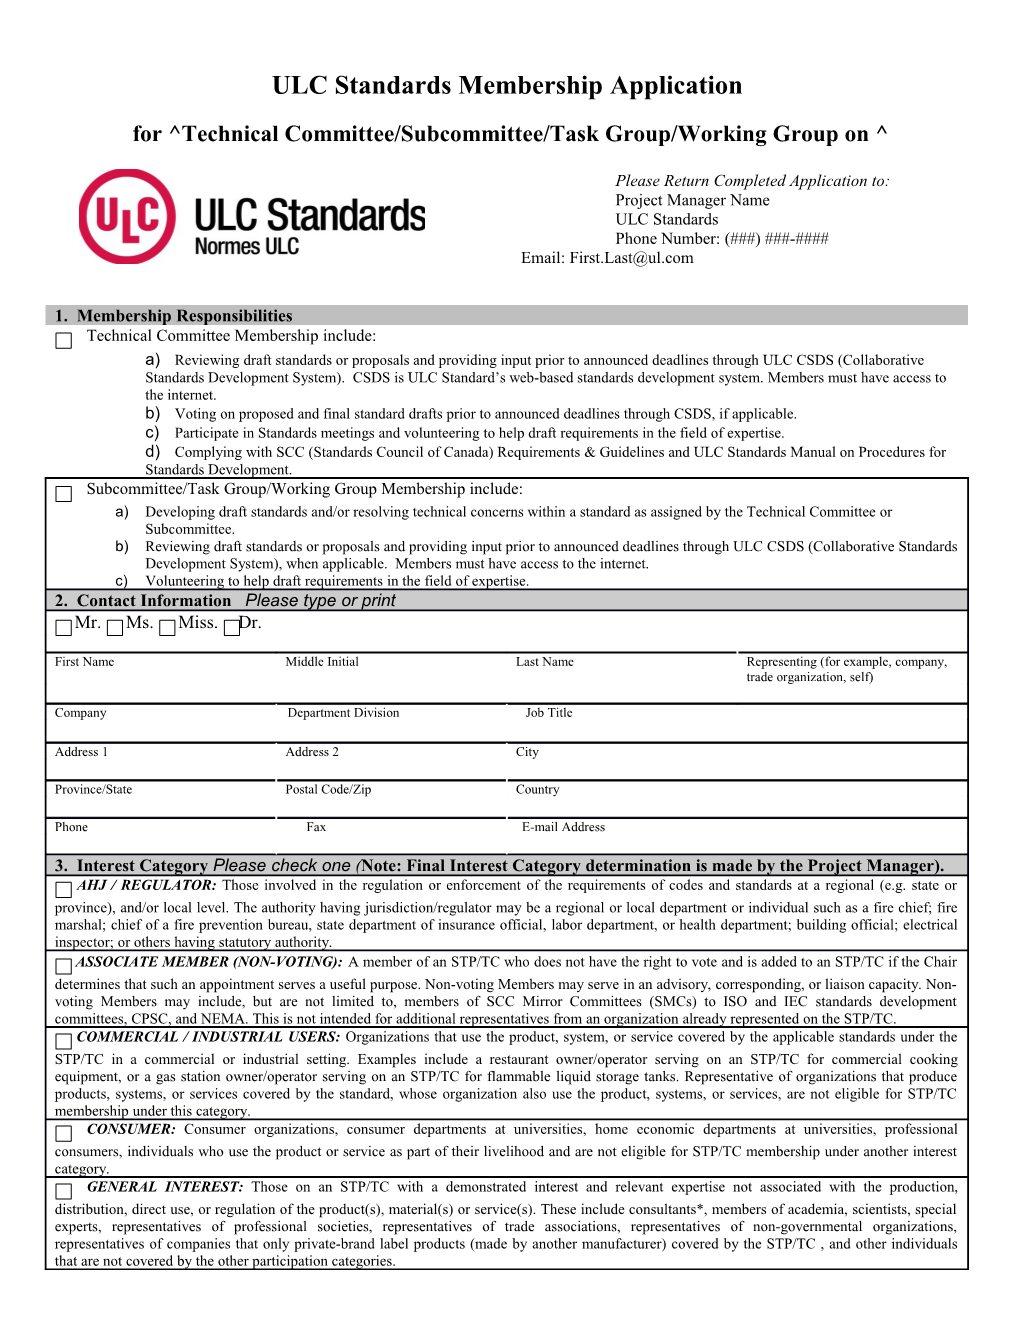 ULC Committee Application V2 01152015